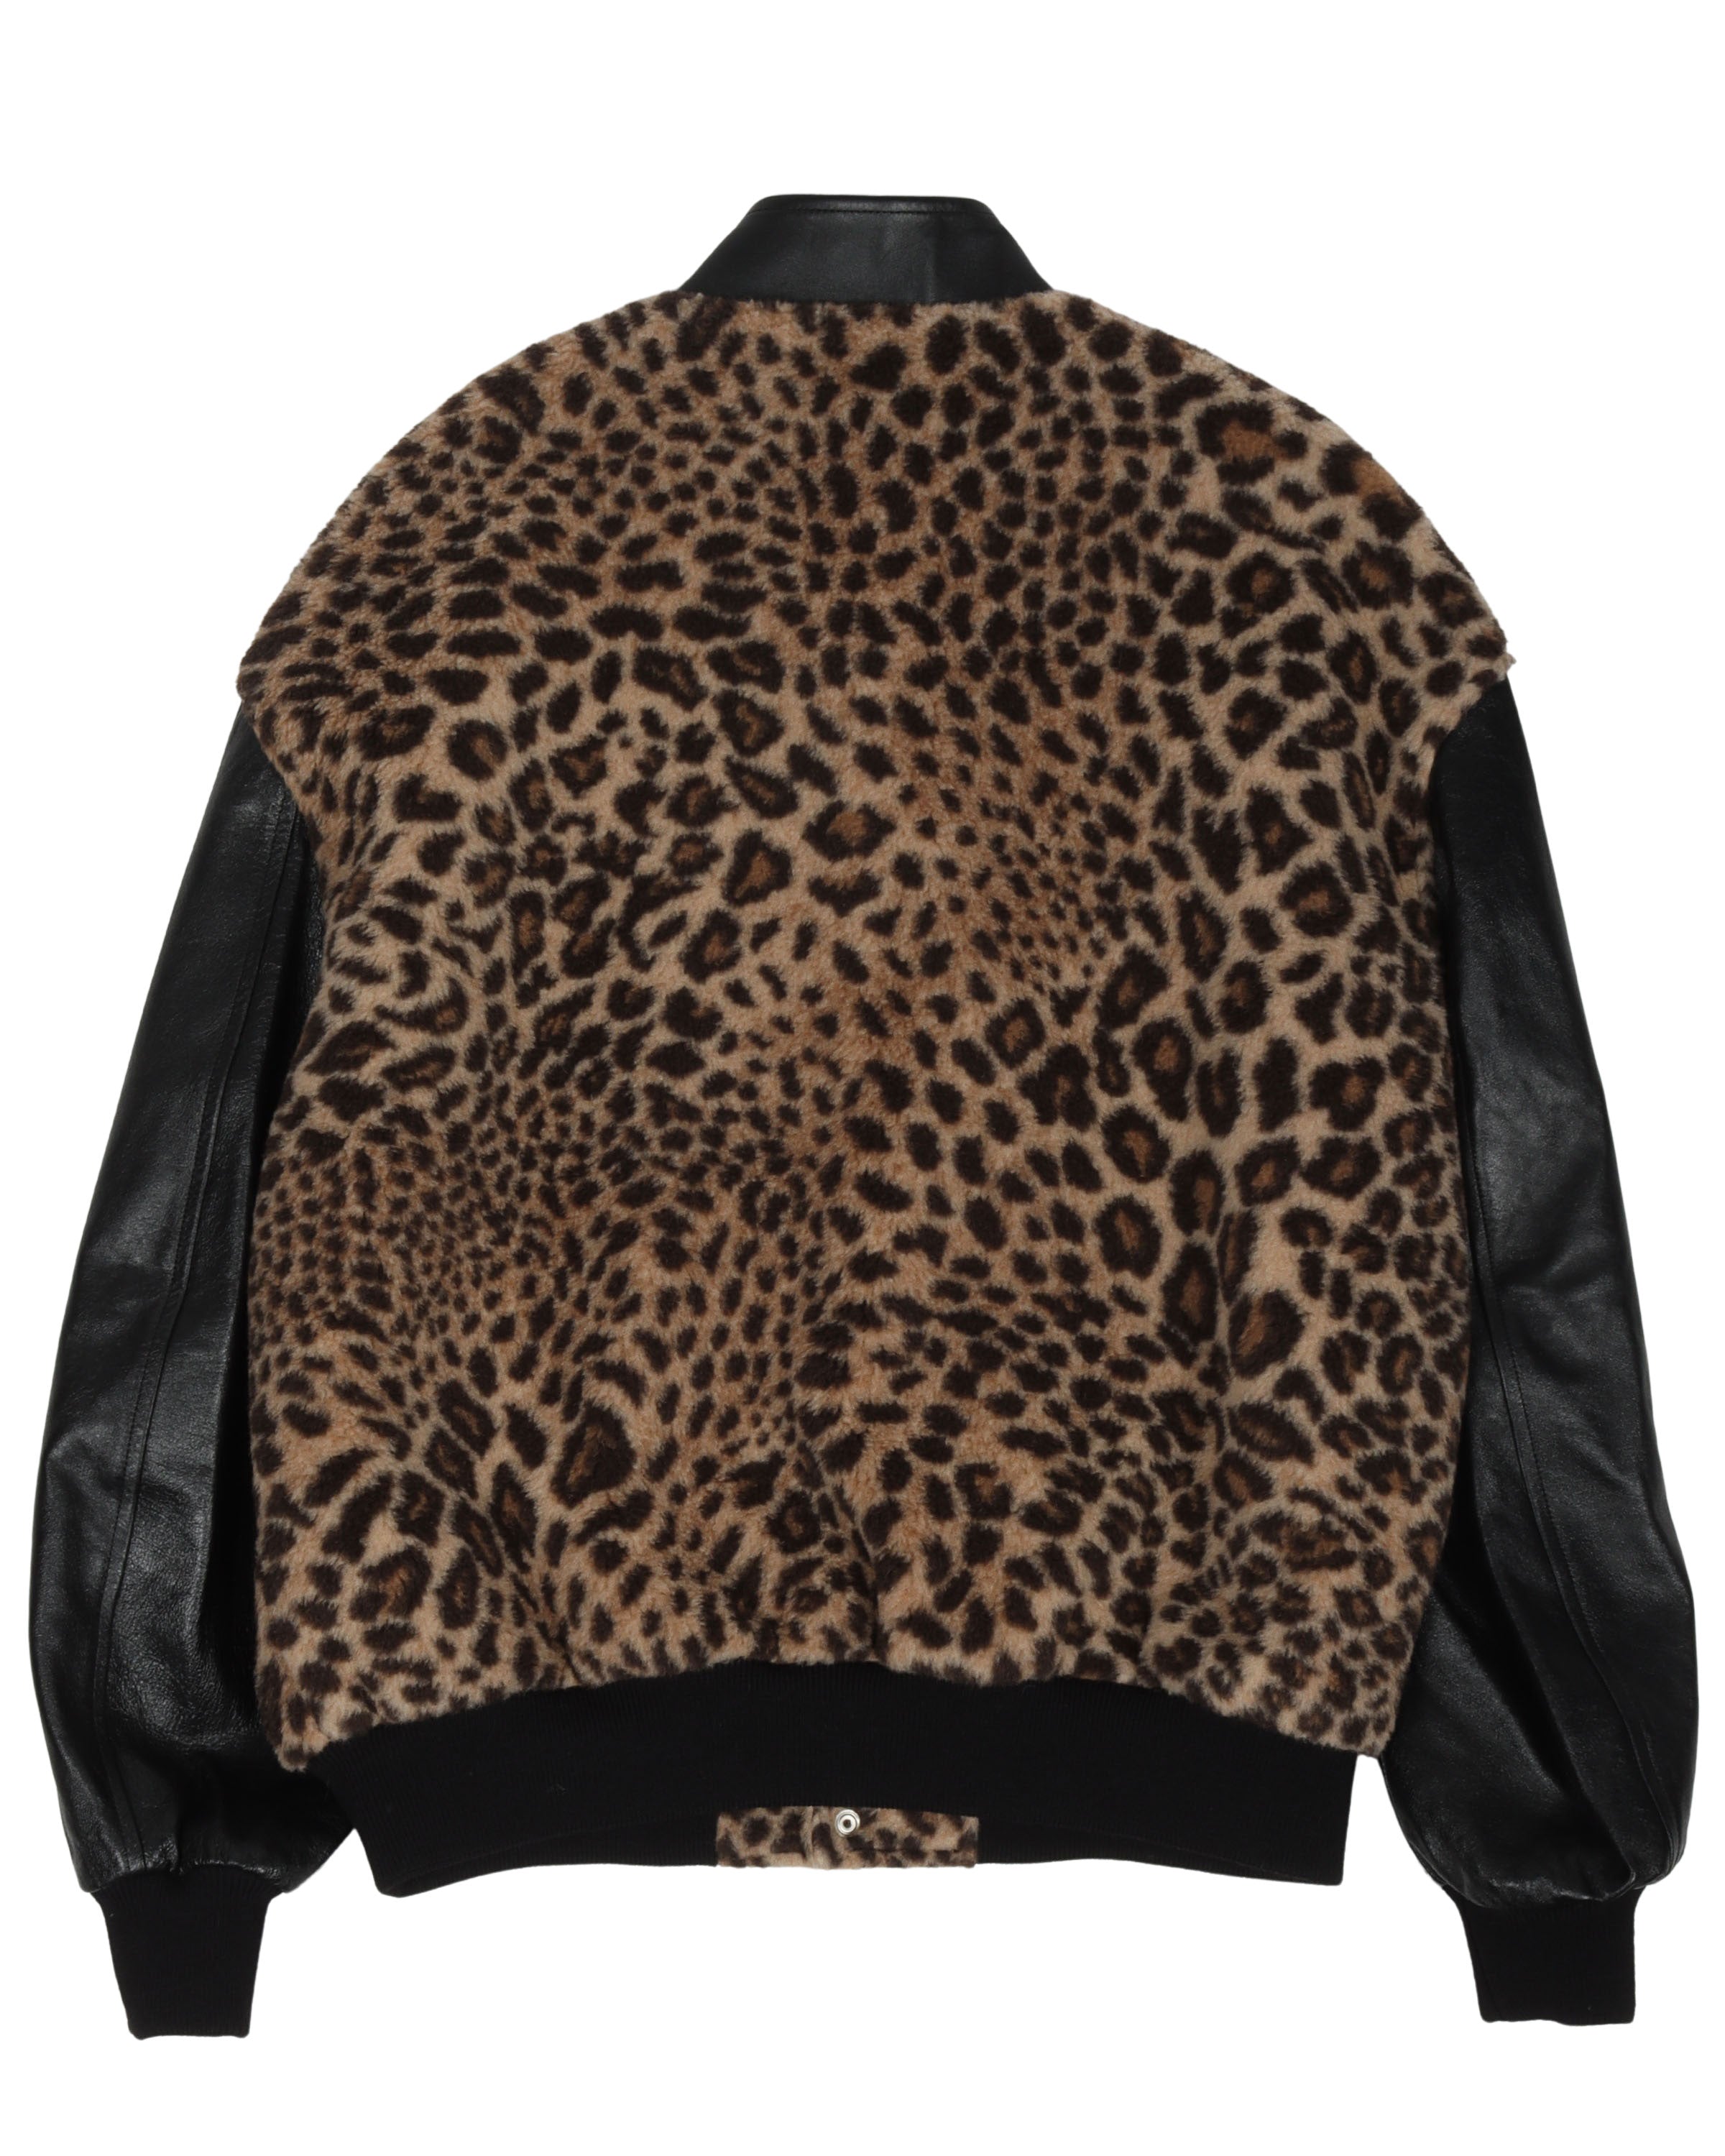 Crystal Leopard Leather Bomber Jacket